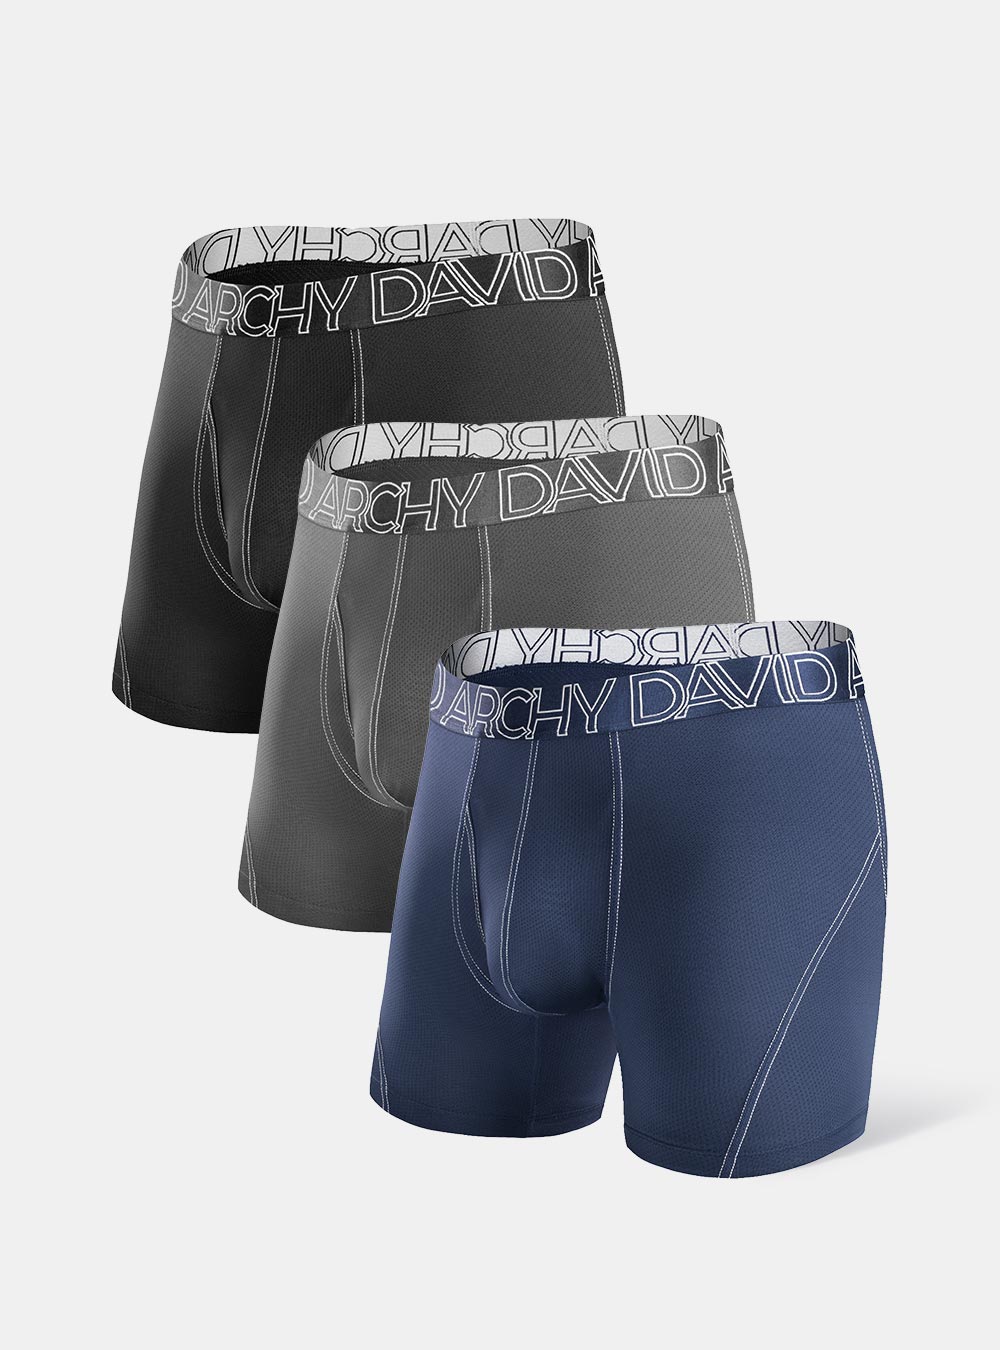 DAVID ARCHY Men's Seamless Underwear Ultra Soft Micro Modal Trunks 3 Pack  Boxer Shorts, Black/Navy Blue/Wine-3 Pack, L price in UAE,  UAE